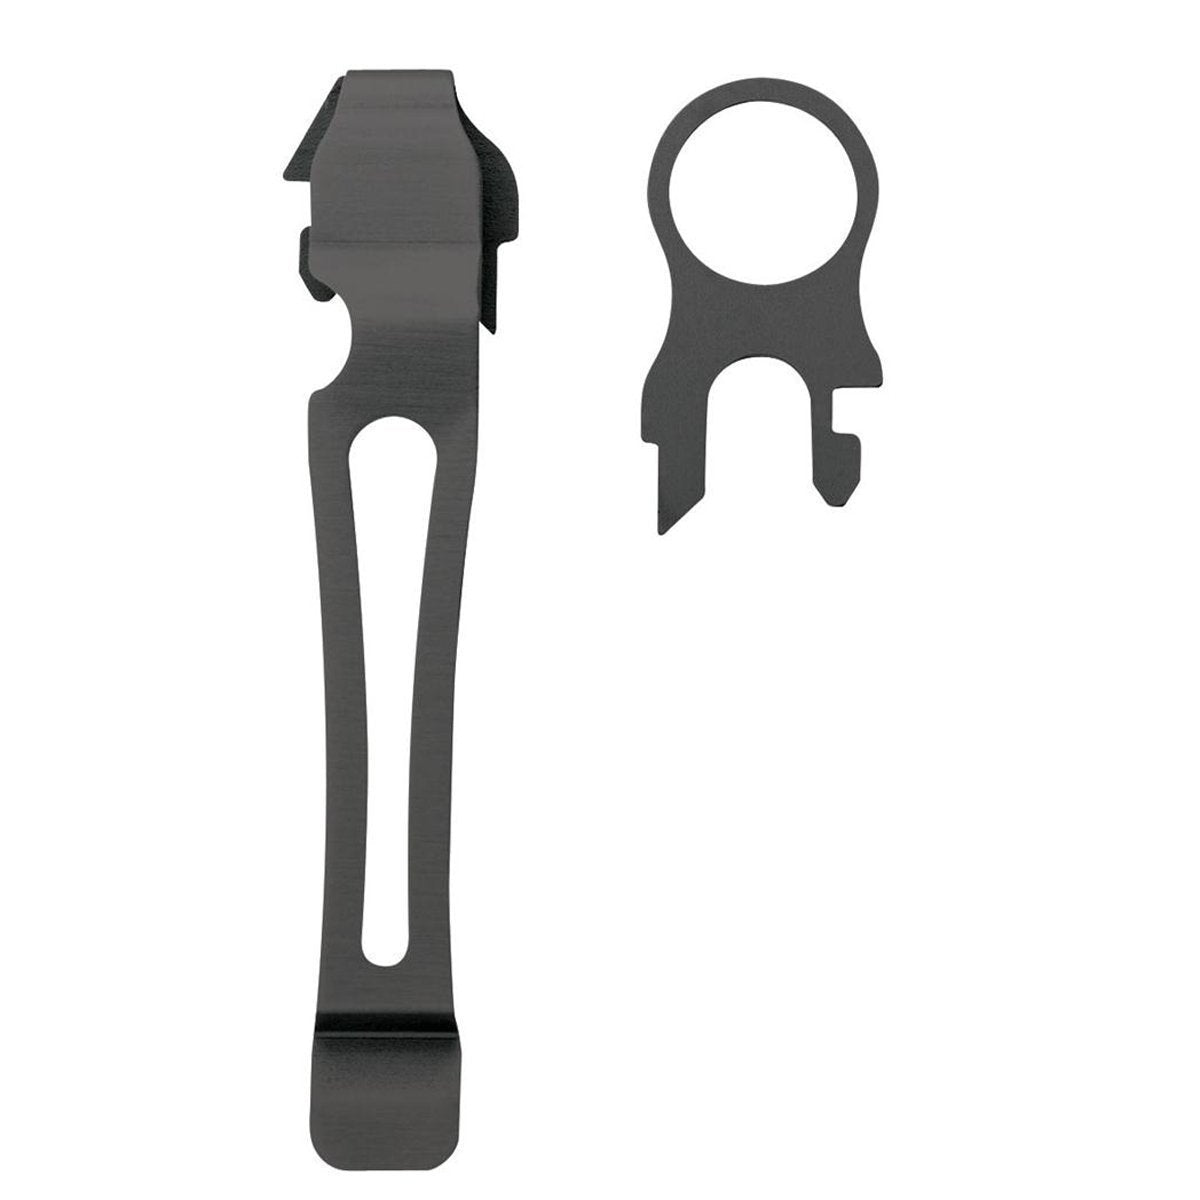 Leatherman Pocket Clip &amp; Lanyard Ring - Black Accessories Leatherman Tactical Gear Supplier Tactical Distributors Australia